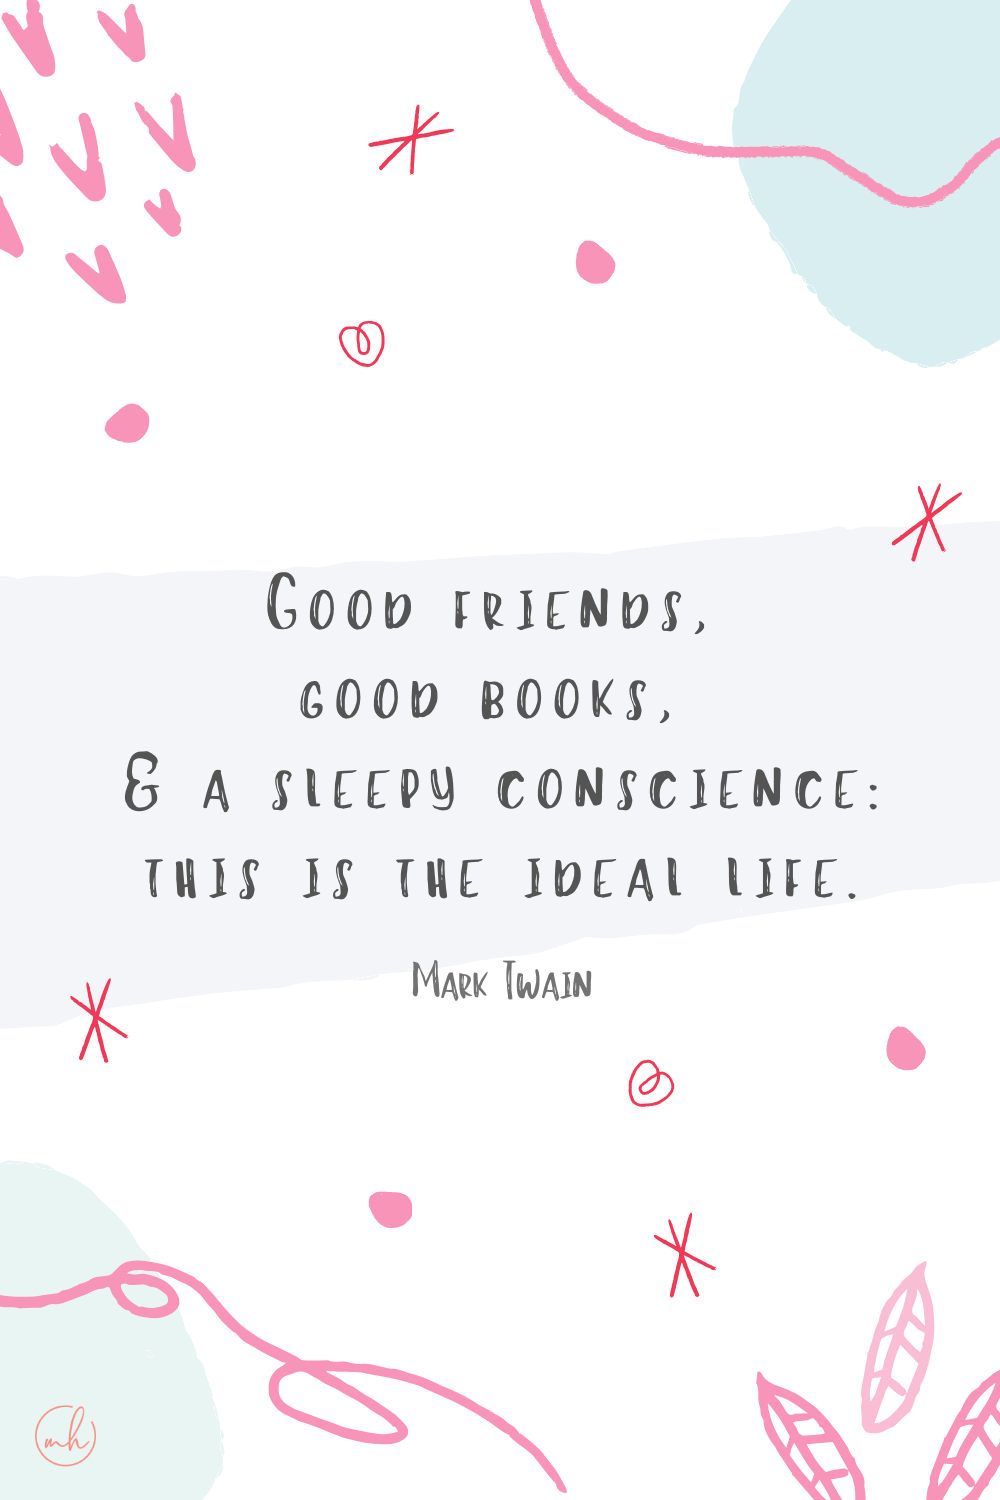 "Good friends, good books, and a sleepy conscience: this is the ideal life." - Mark Twain